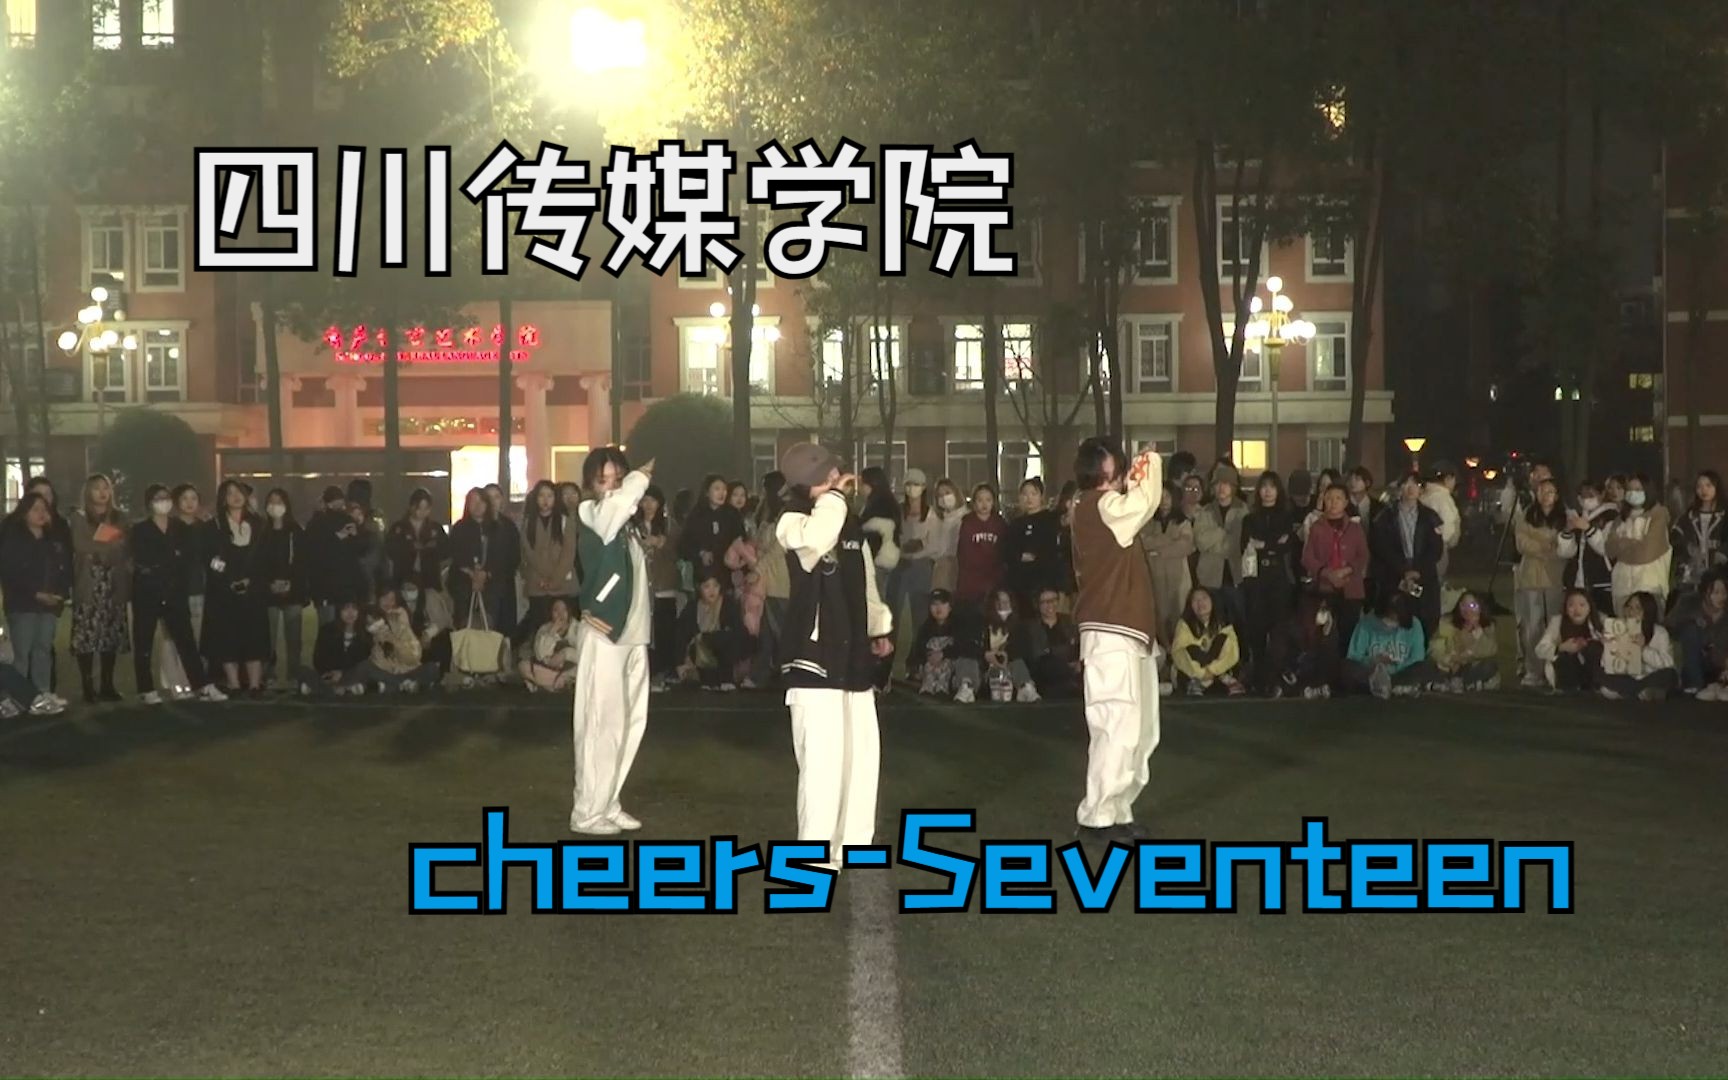 【Cheers-seventeen】3leaders帅翻全场~表现力拉满！大学生申请出战拯救内娱！！